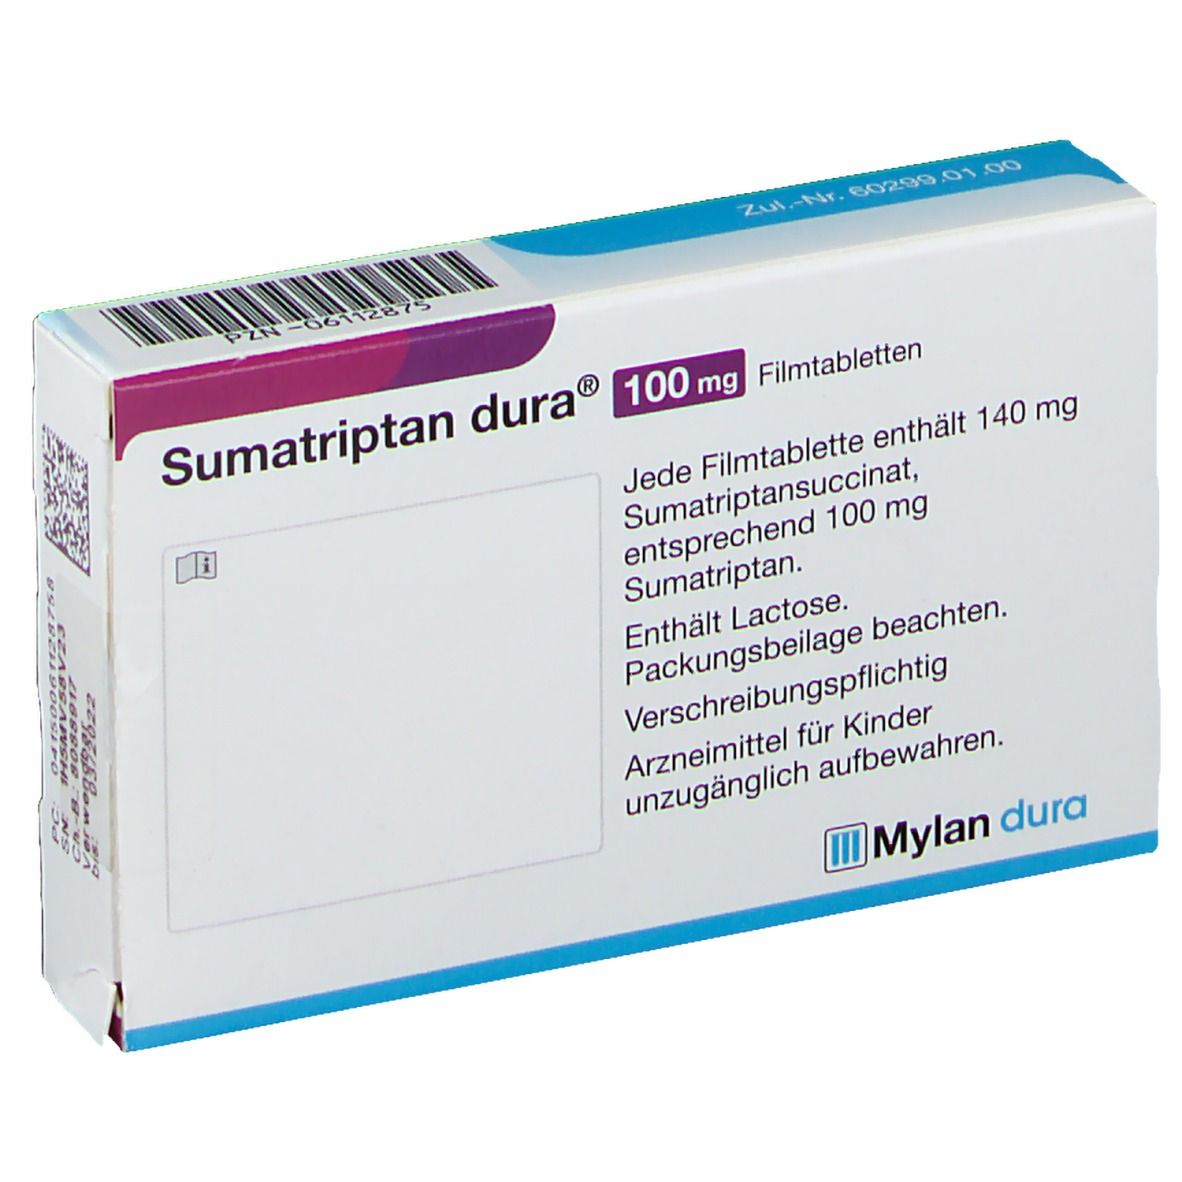 Sumatriptan dura® 100 mg